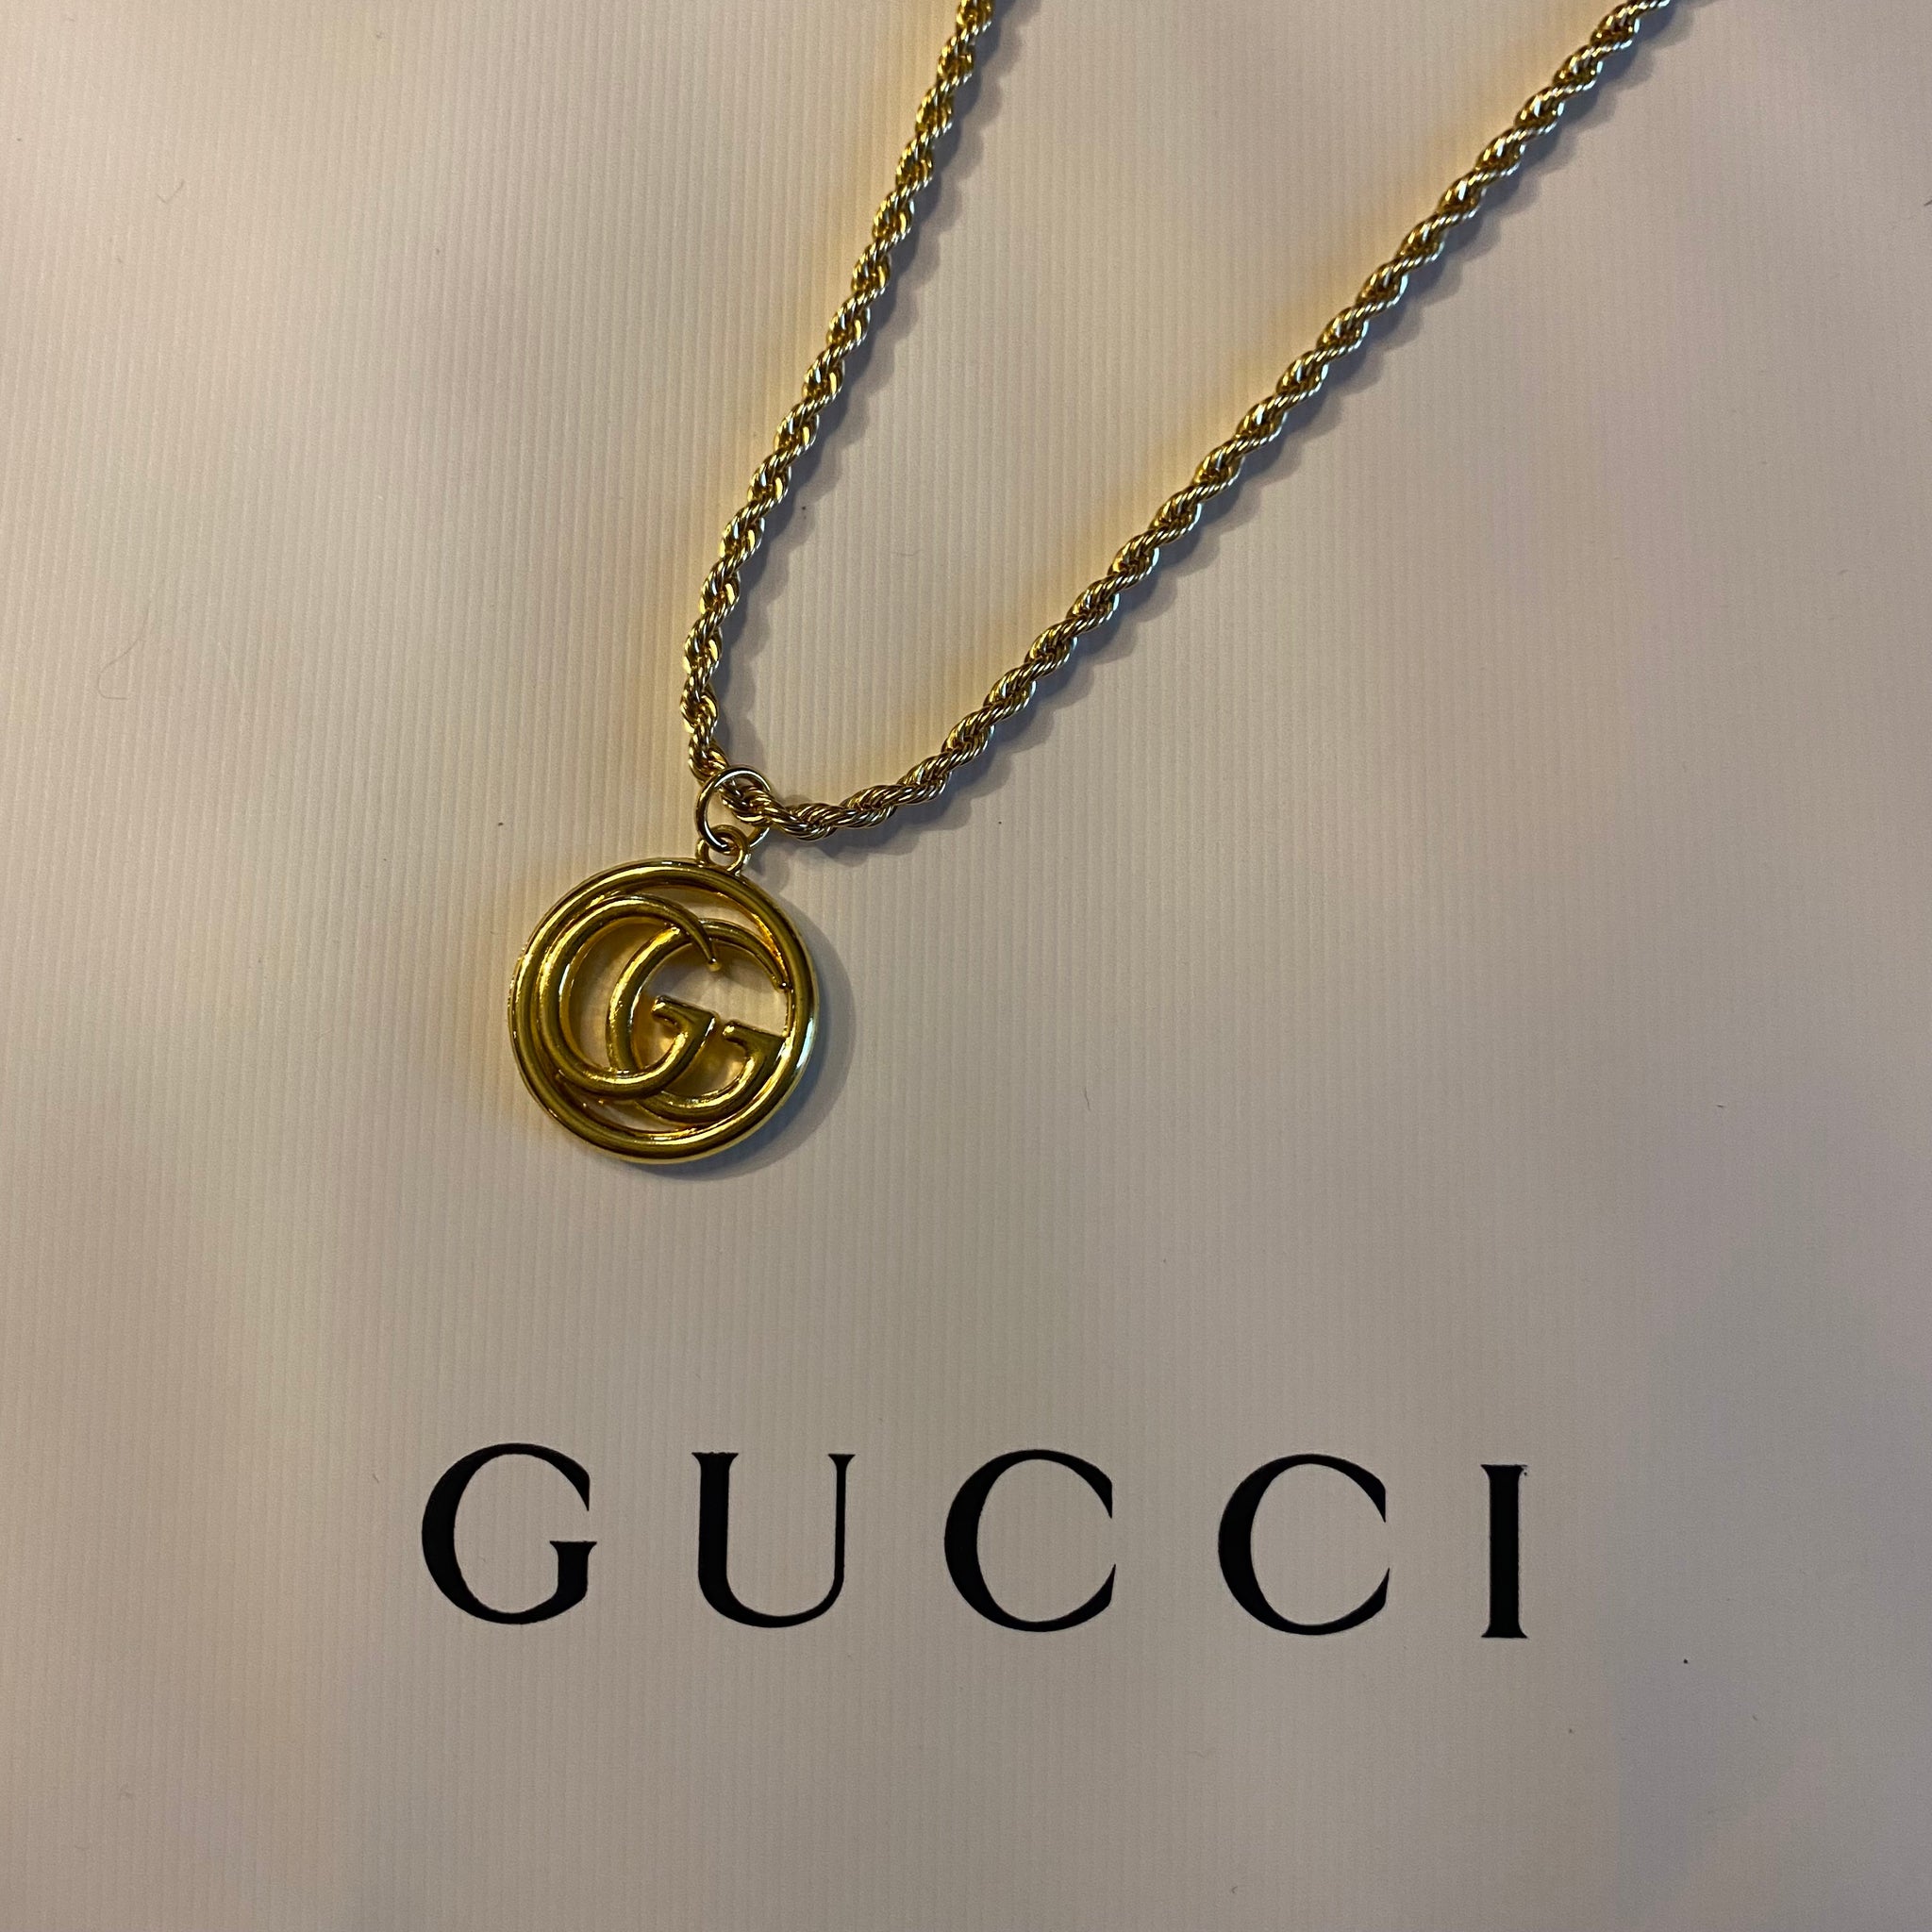 Authentic Gucci Zipper Pull